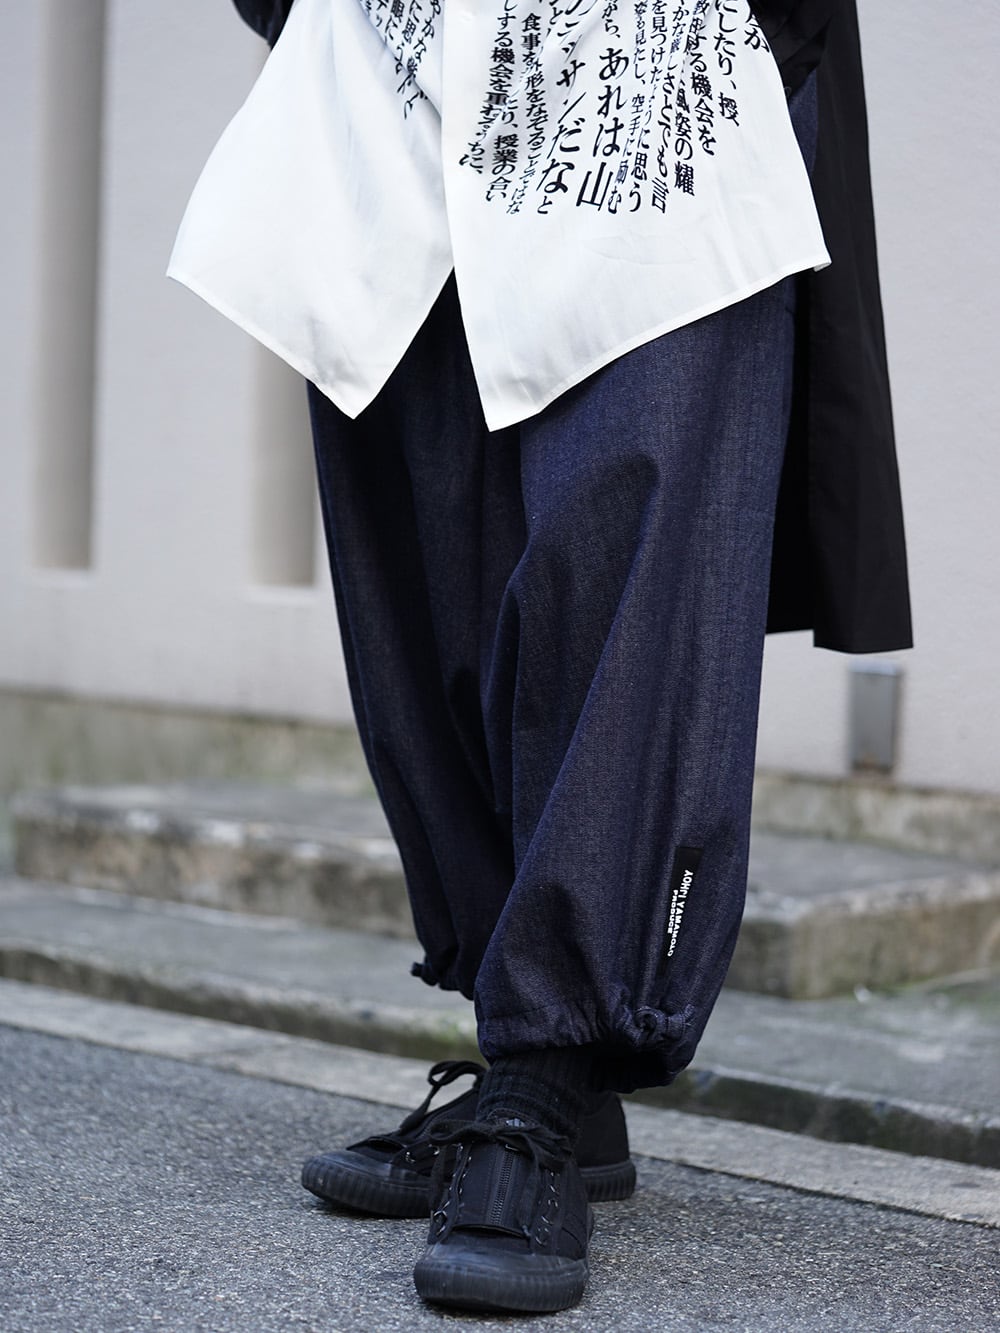 Yohji Yamamoto 2019SS Collection Delivery Start!! - FASCINATE BLOG